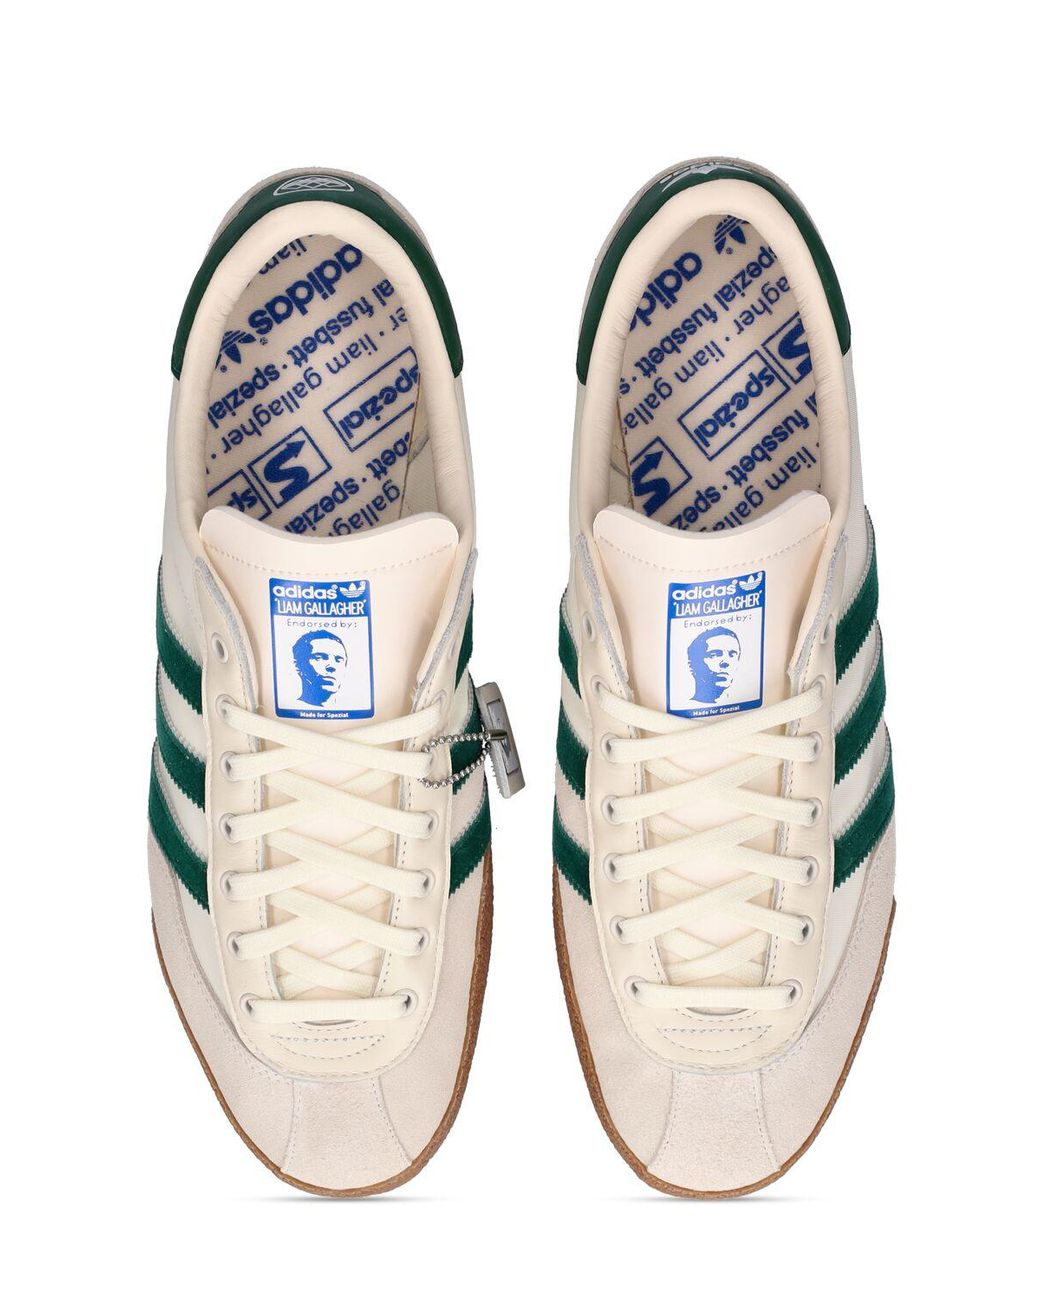 Sneakers liam gallagher ii spezial adidas Originals de hombre de color  Verde | Lyst